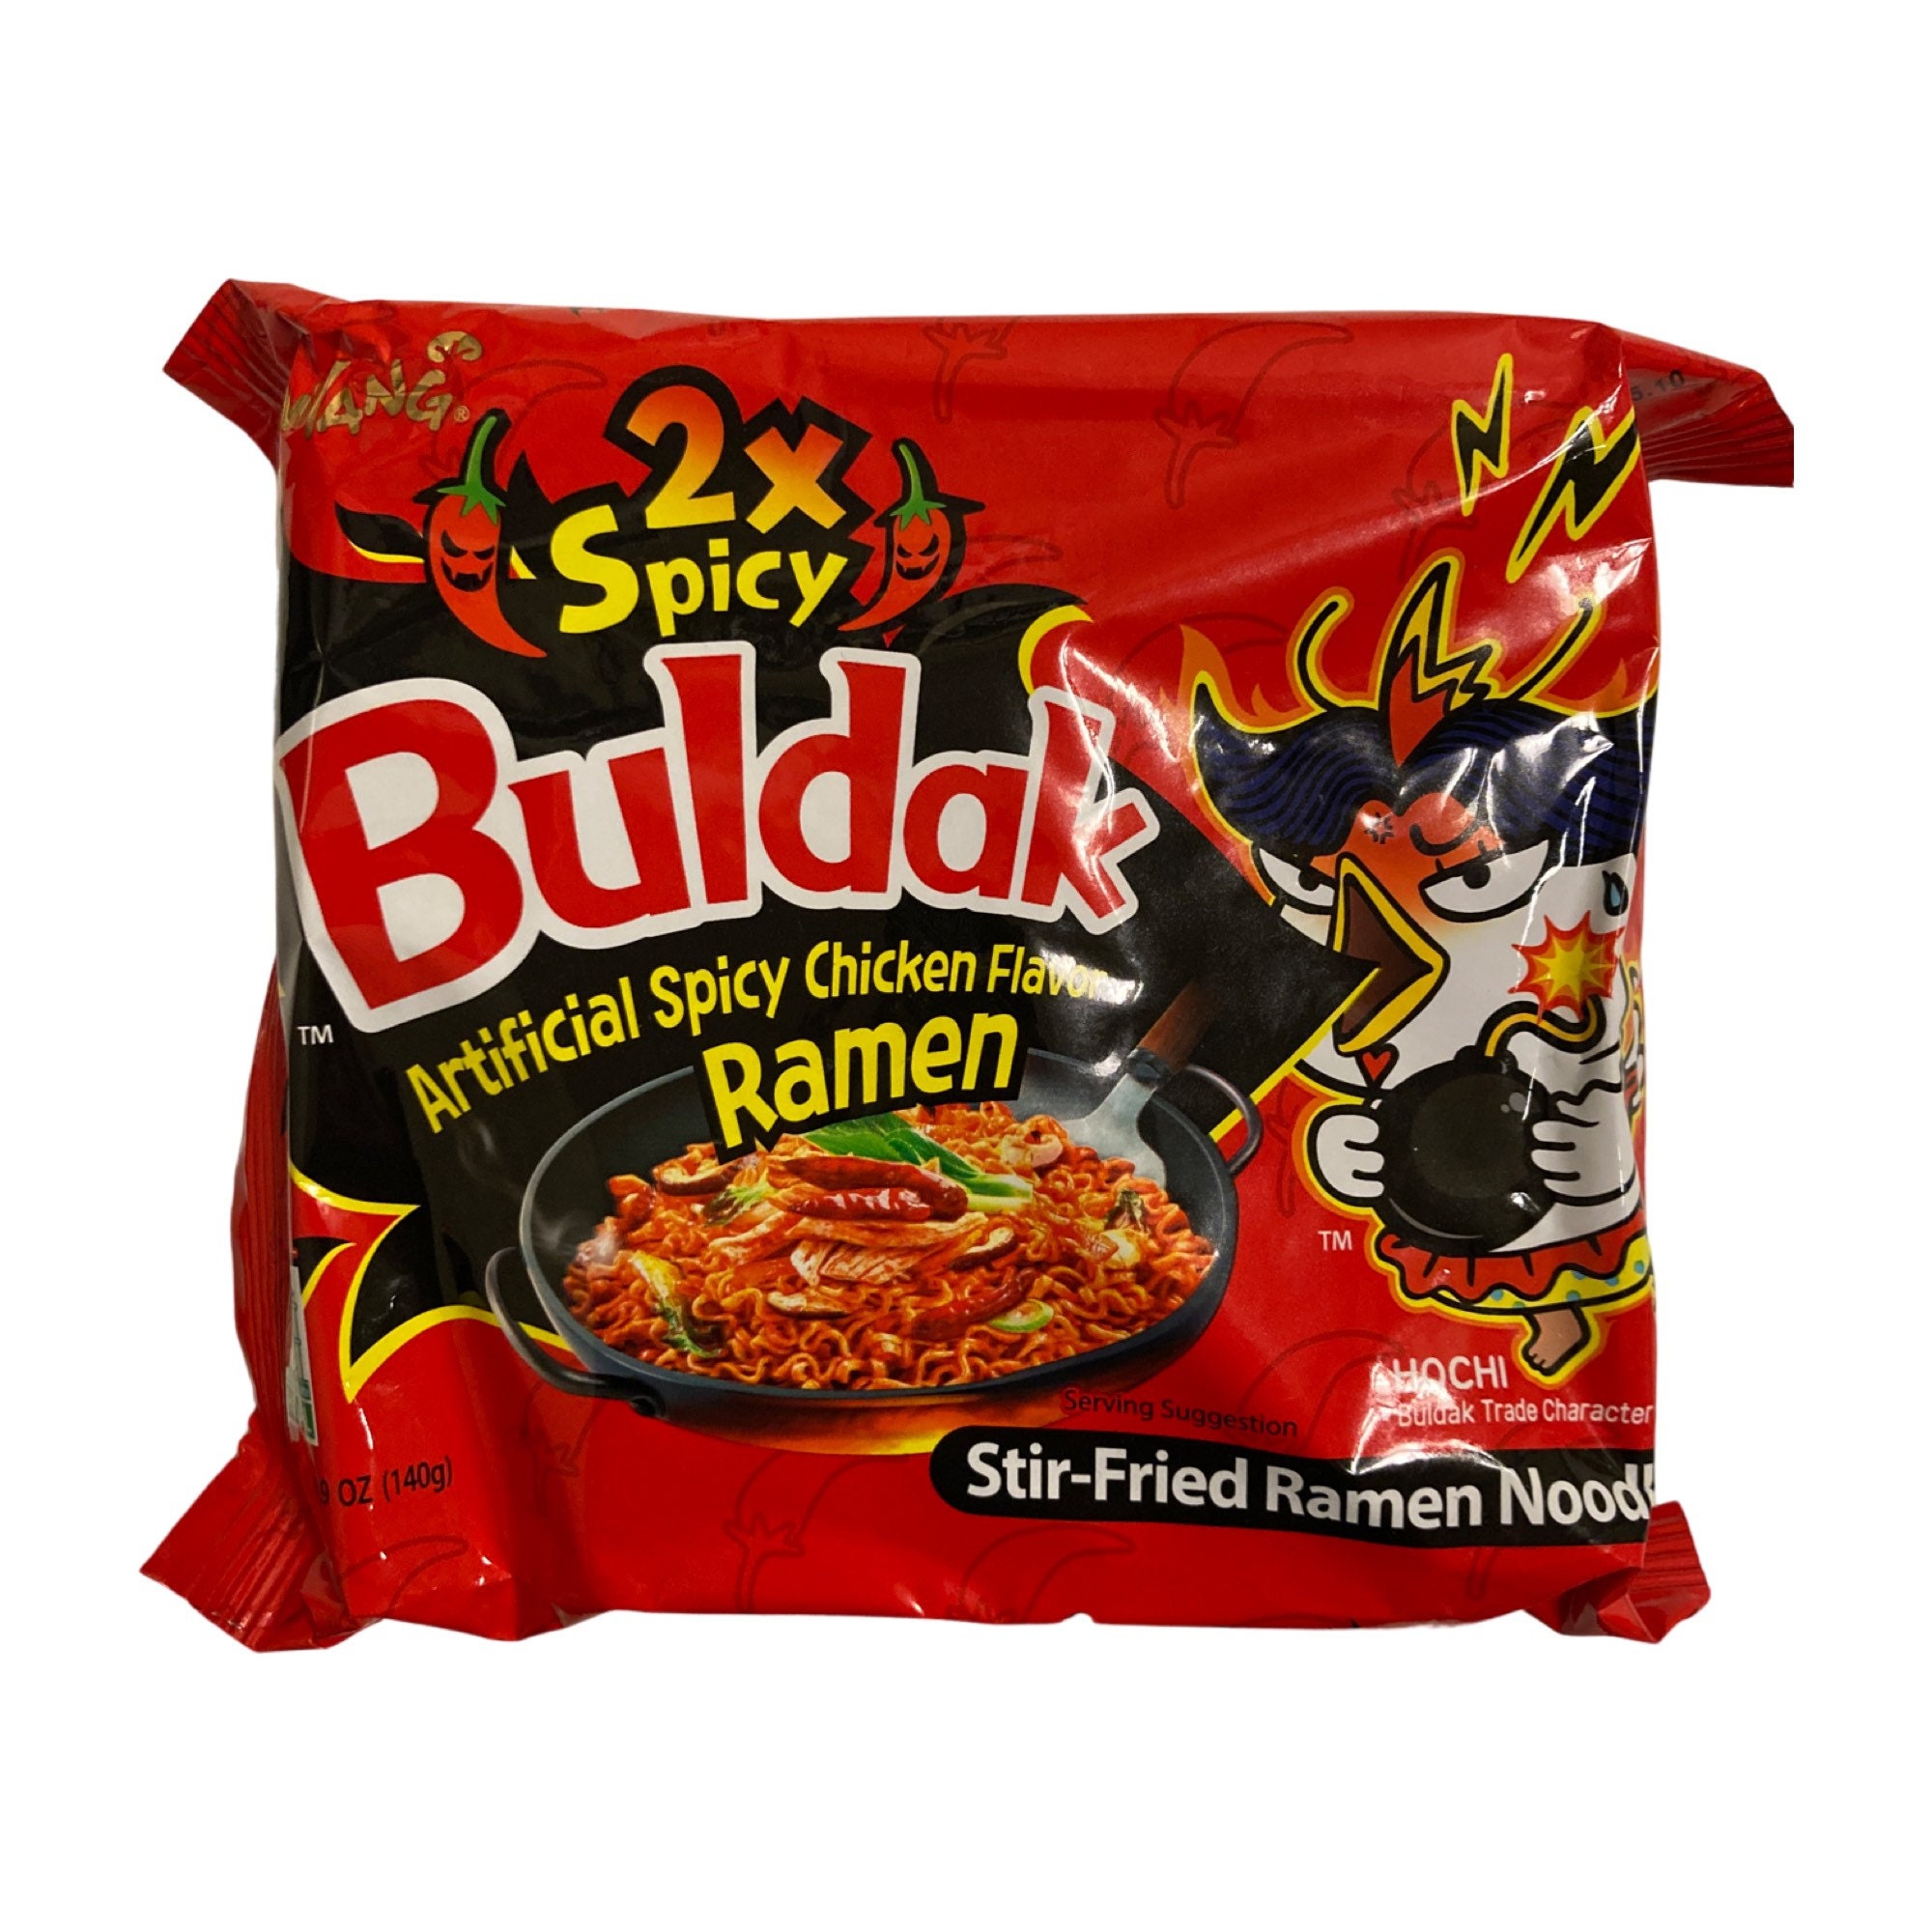 1. Buldak artificial spicy chicken flavor ramen regular spicy ( 5 packs in  one ). 2. 2 x spicy